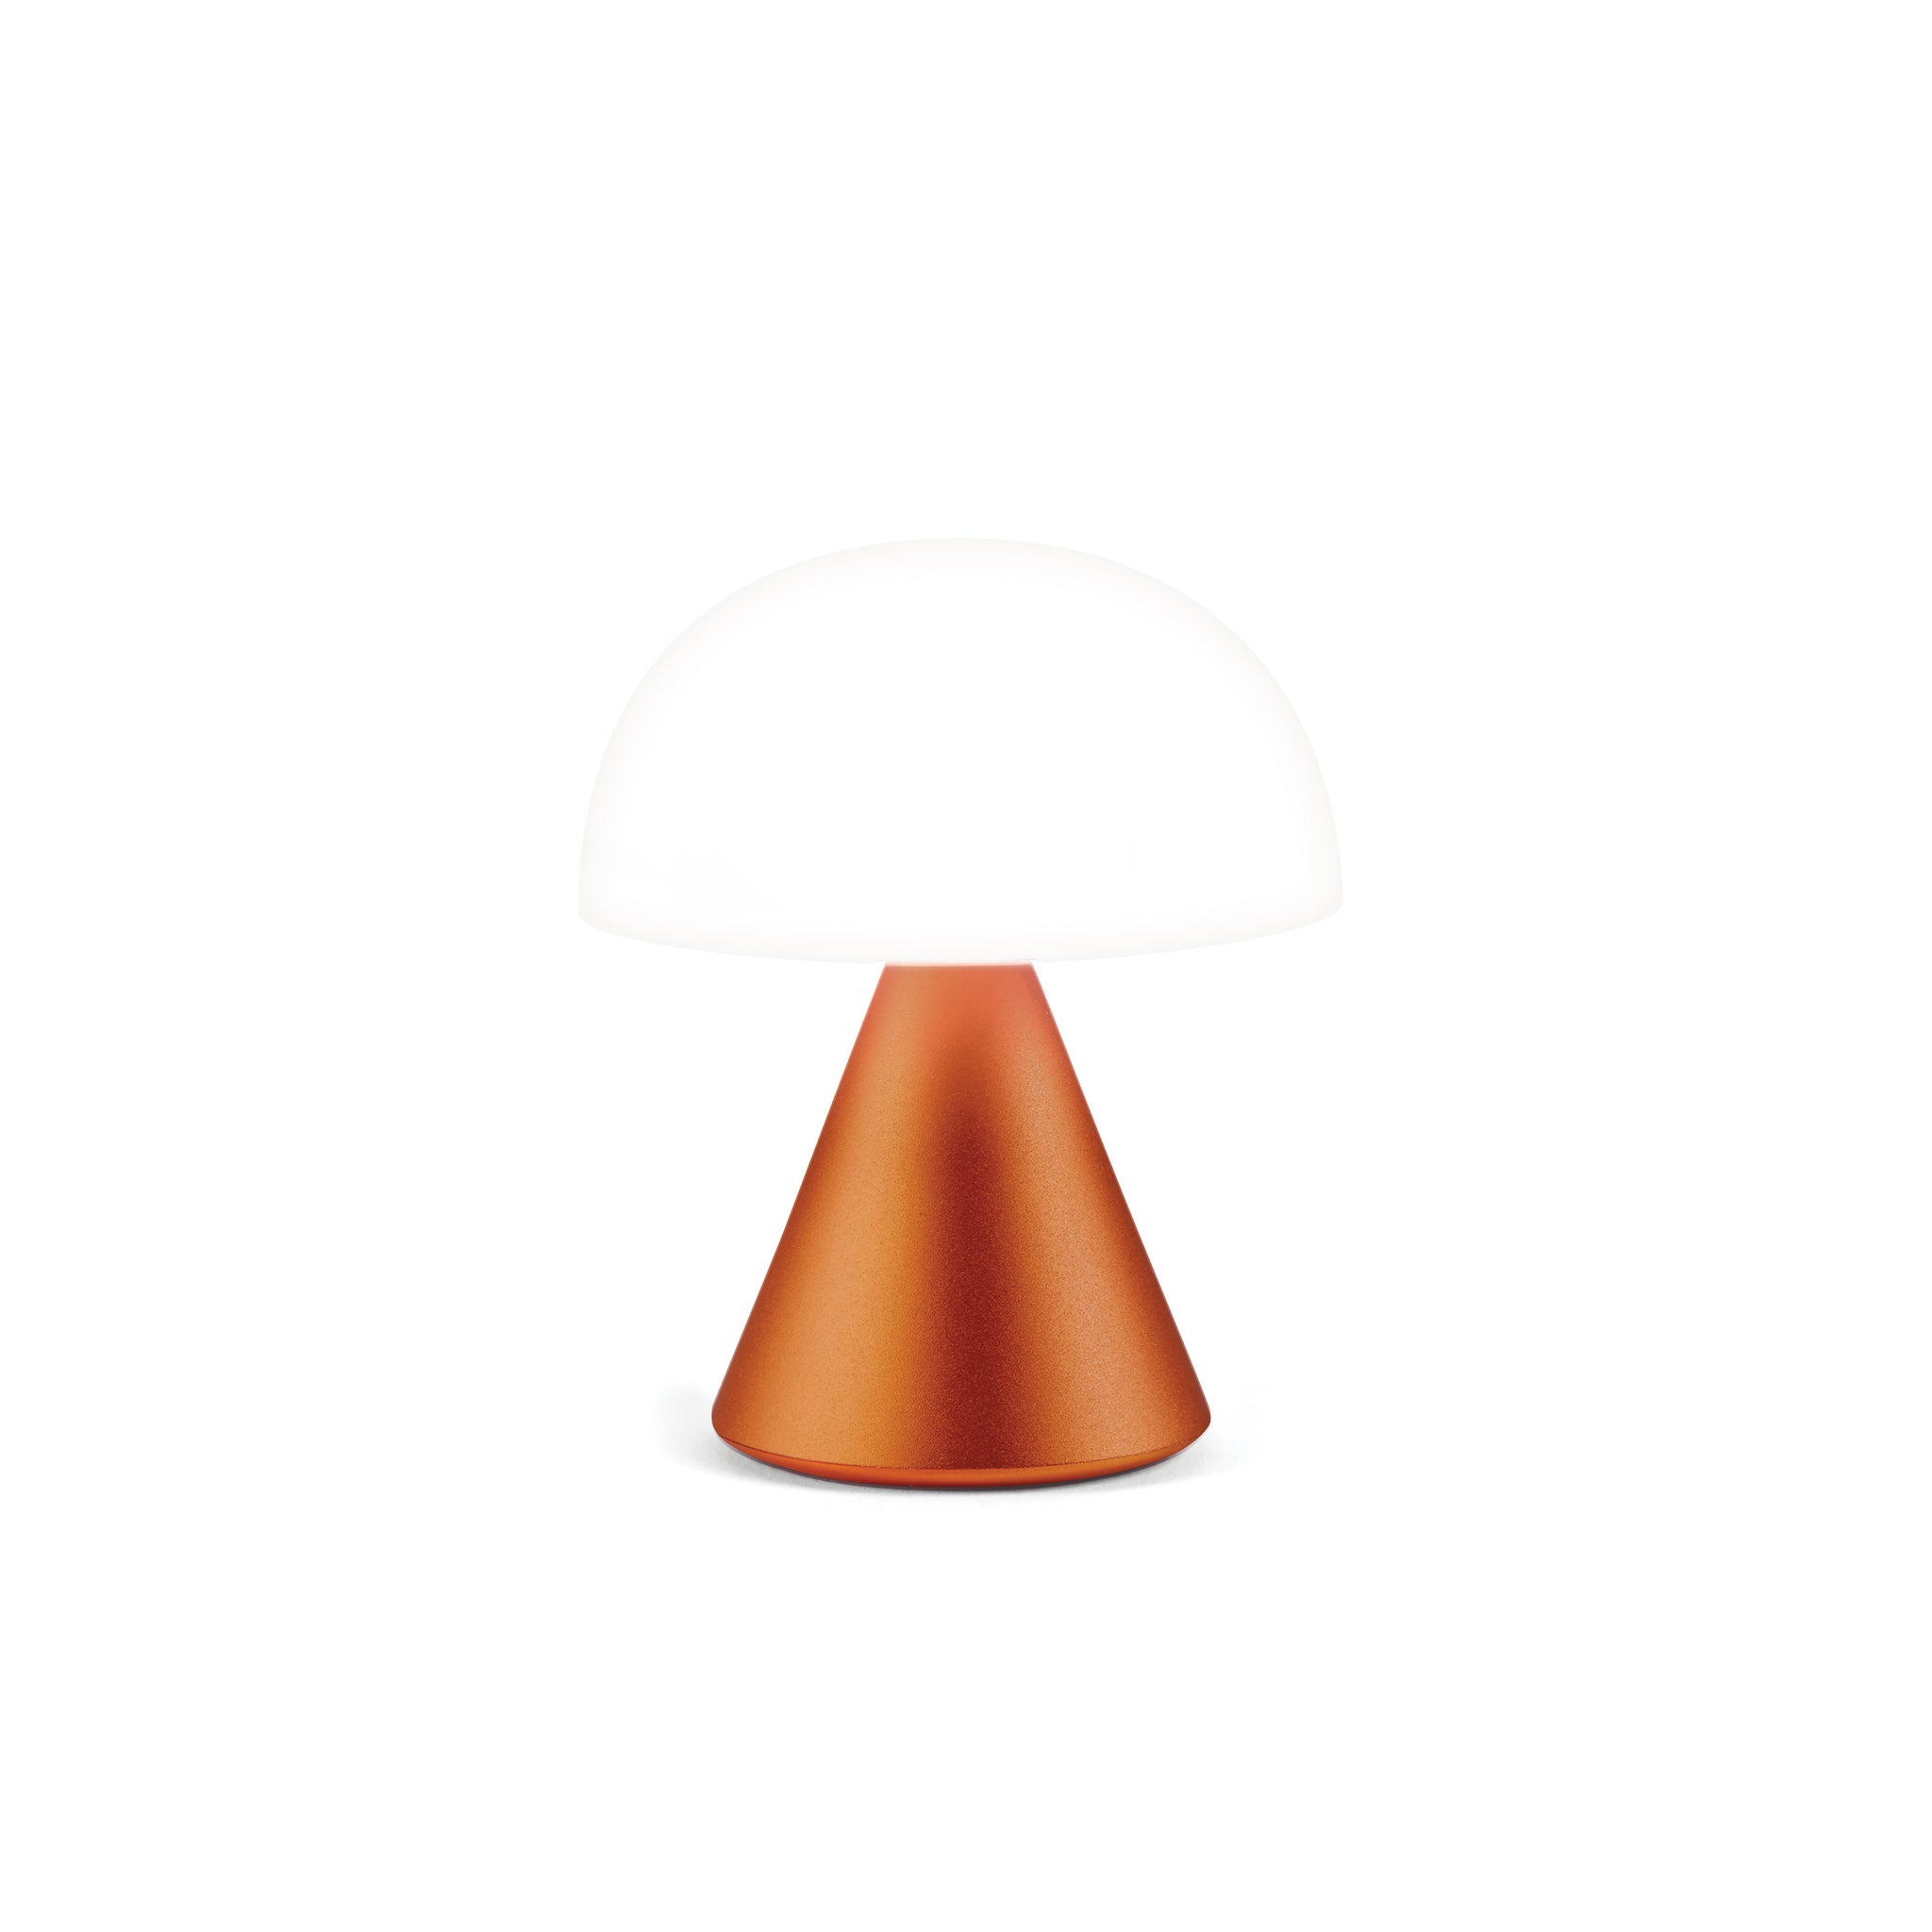 Lexon Mina Small Oranje│Oplaadbare LED-Lamp│art. LH60O1│vooraanzicht met wit licht aan